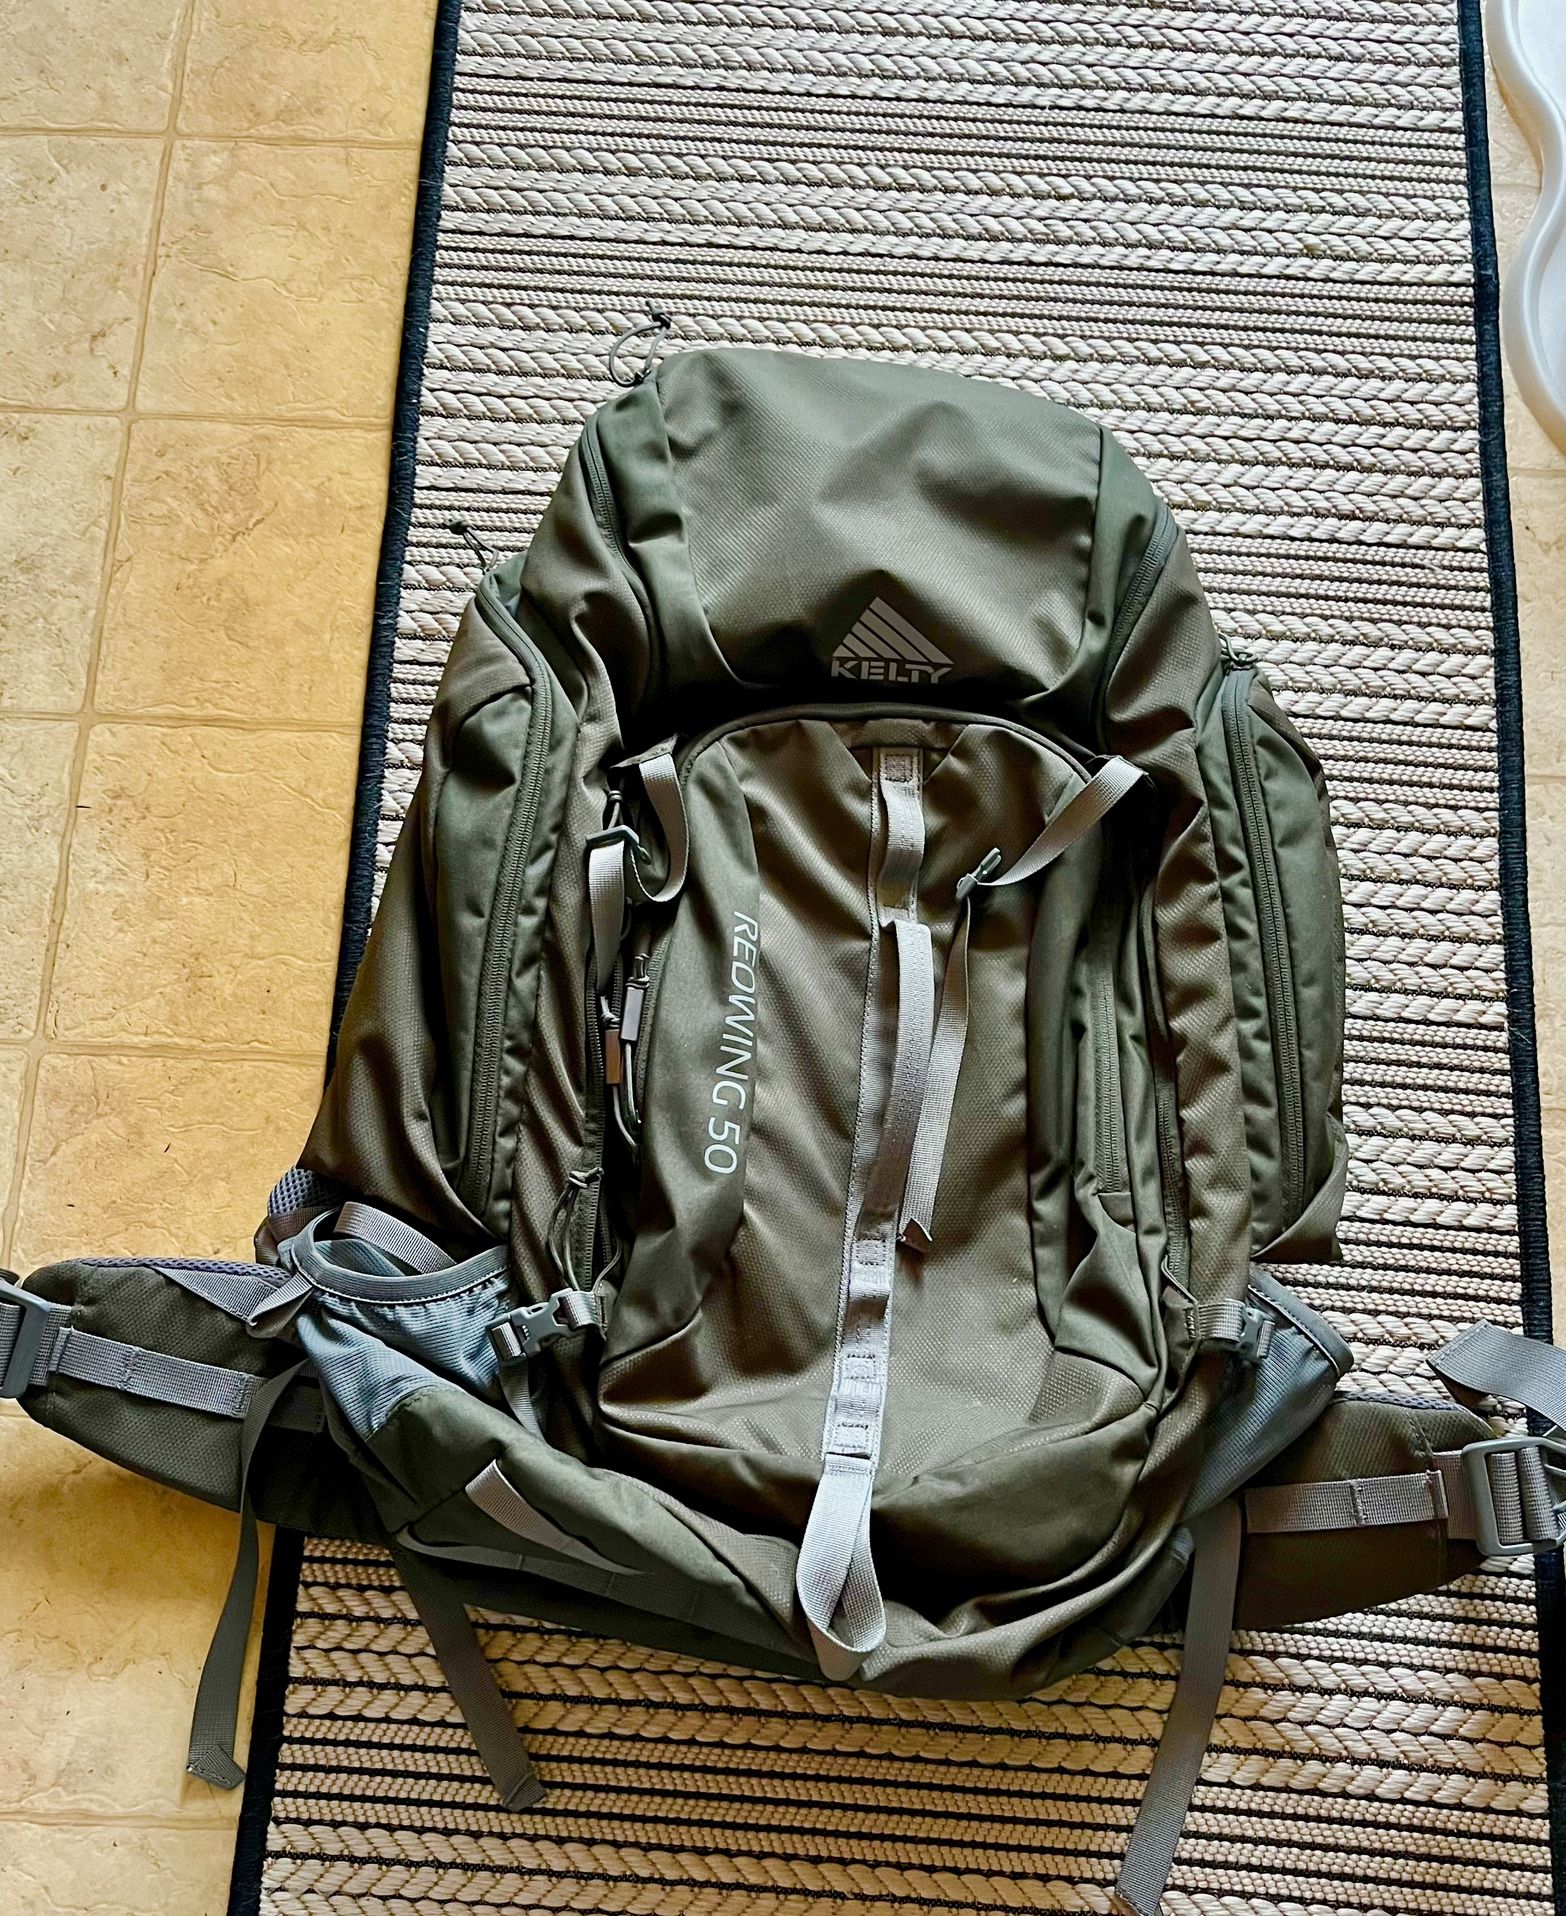 Kelty Redwing 50L Backpack $100 OBO